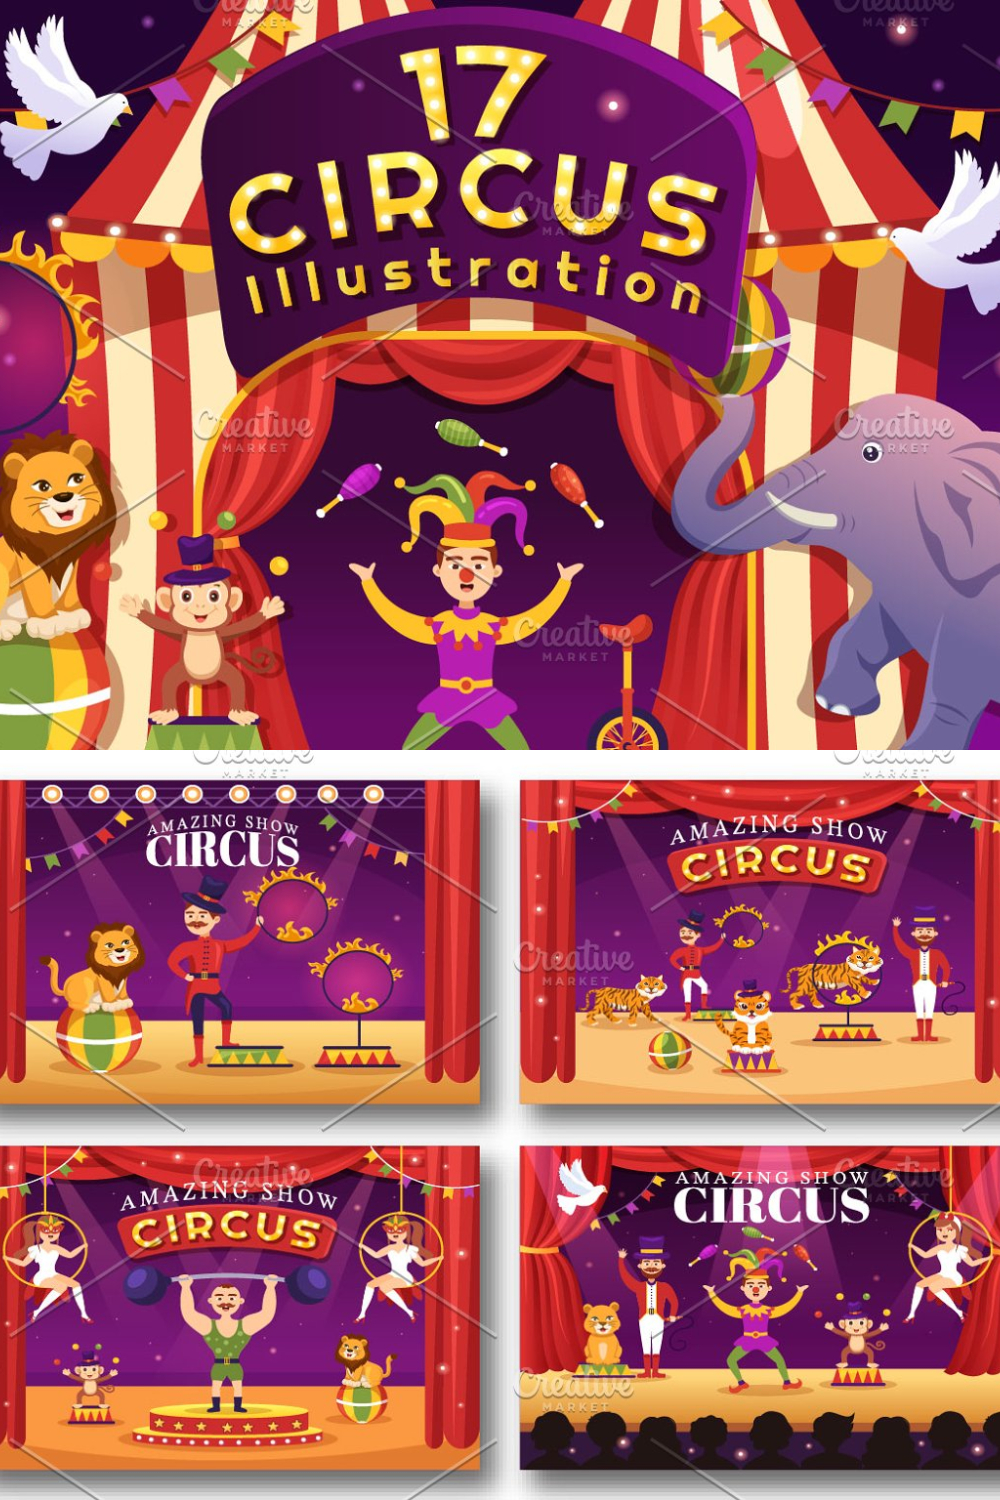 17 Circus Show Illustration - Pinterest.